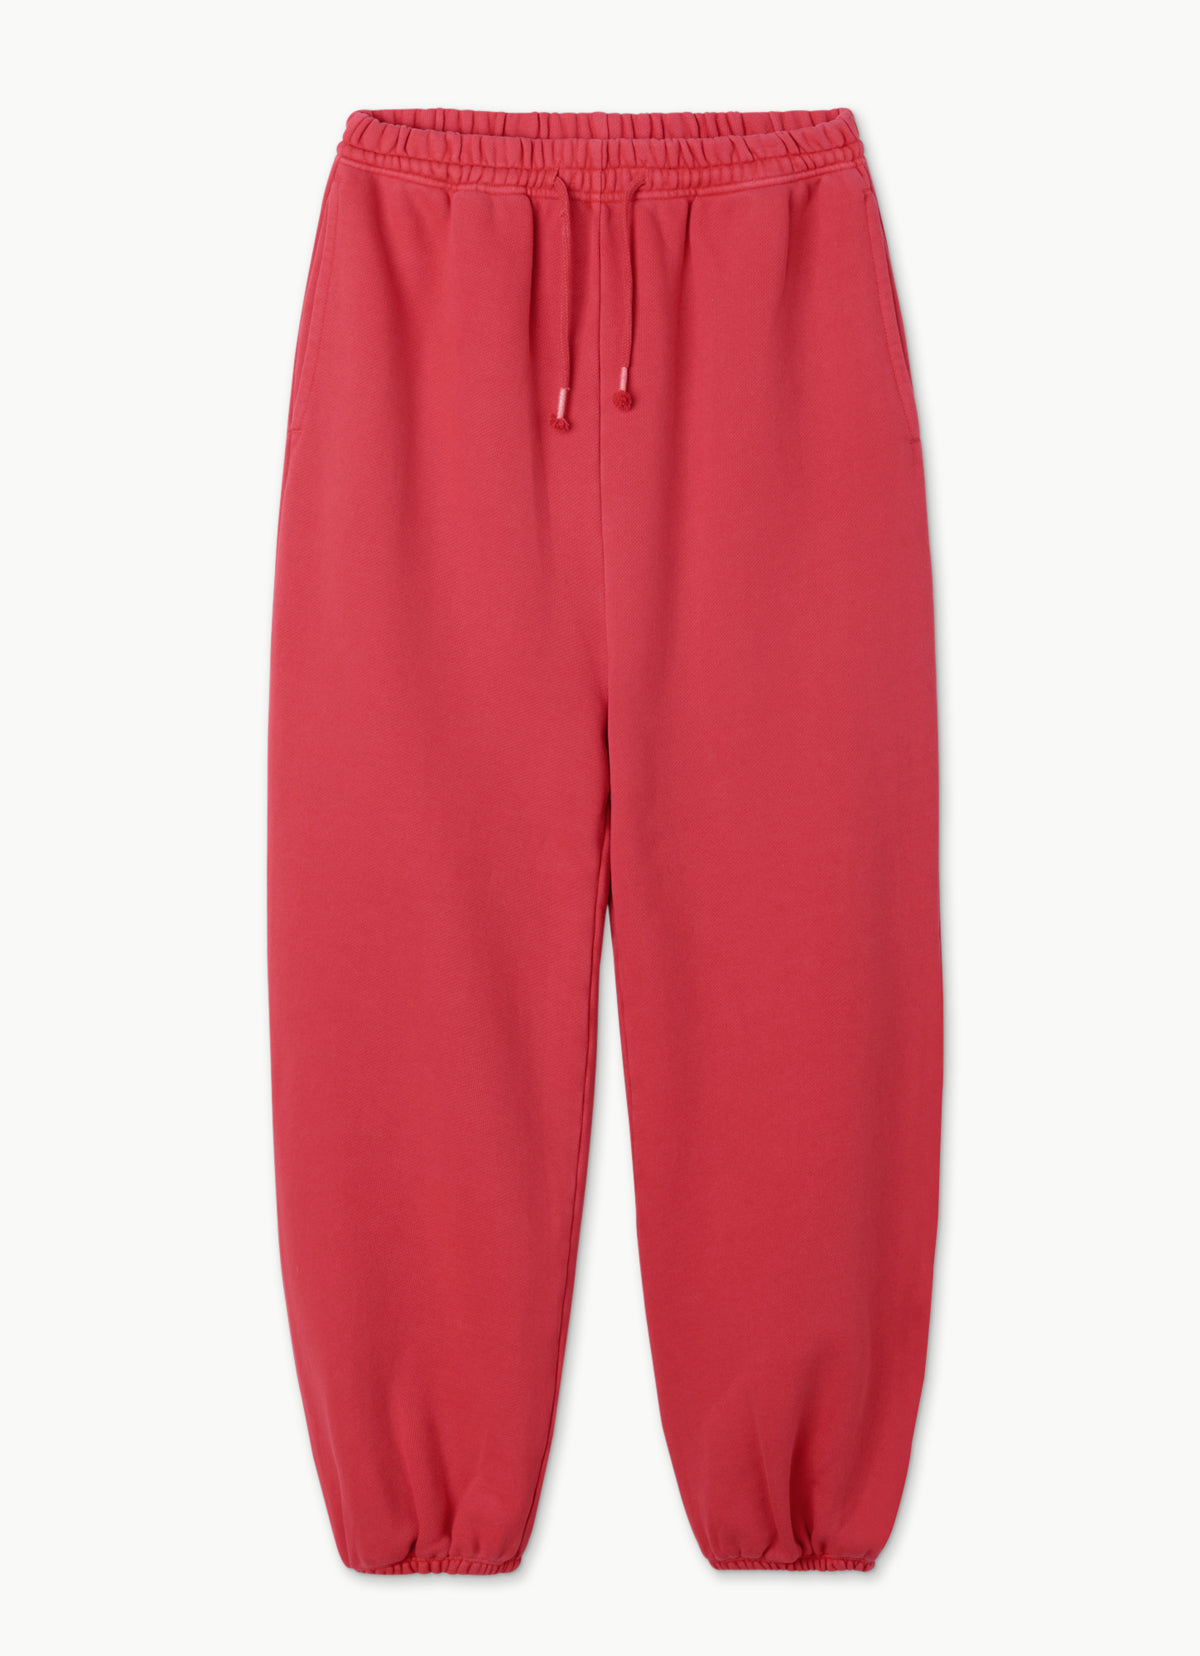 Balloon jogger pants (Unisex)_Red